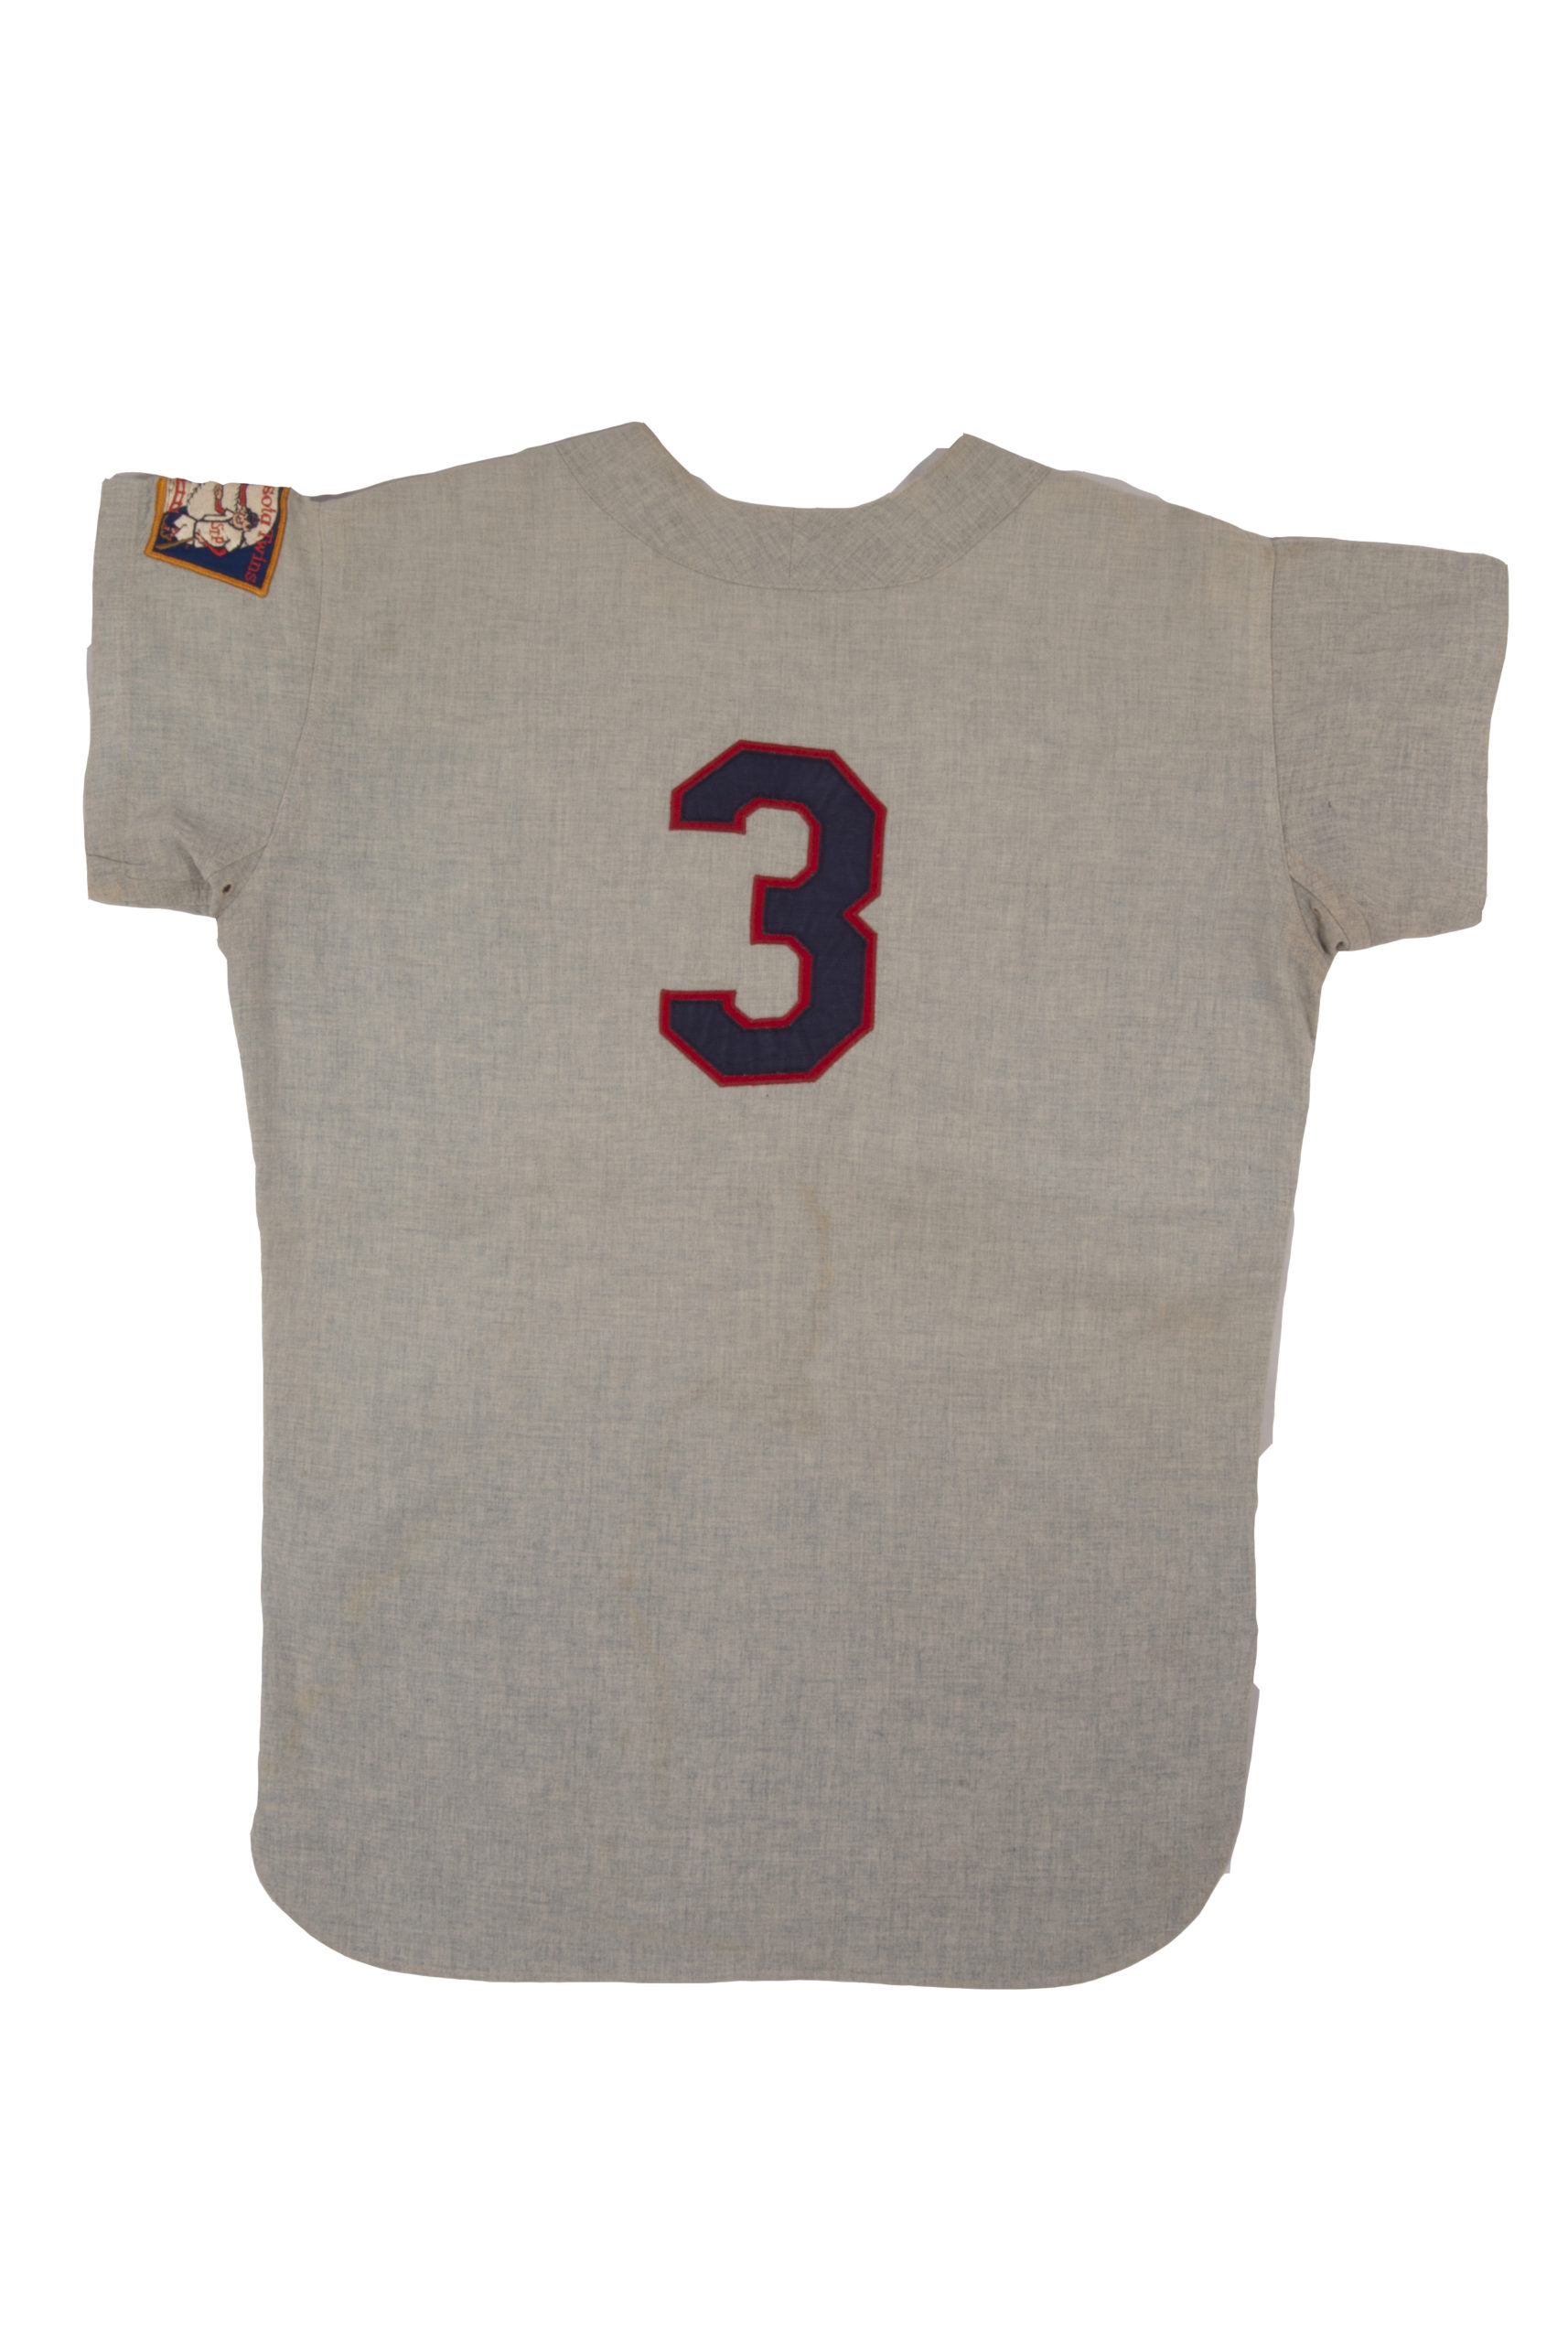 Harmon Killebrew 1967 Minnesota Twins Game Used Flannel Jersey